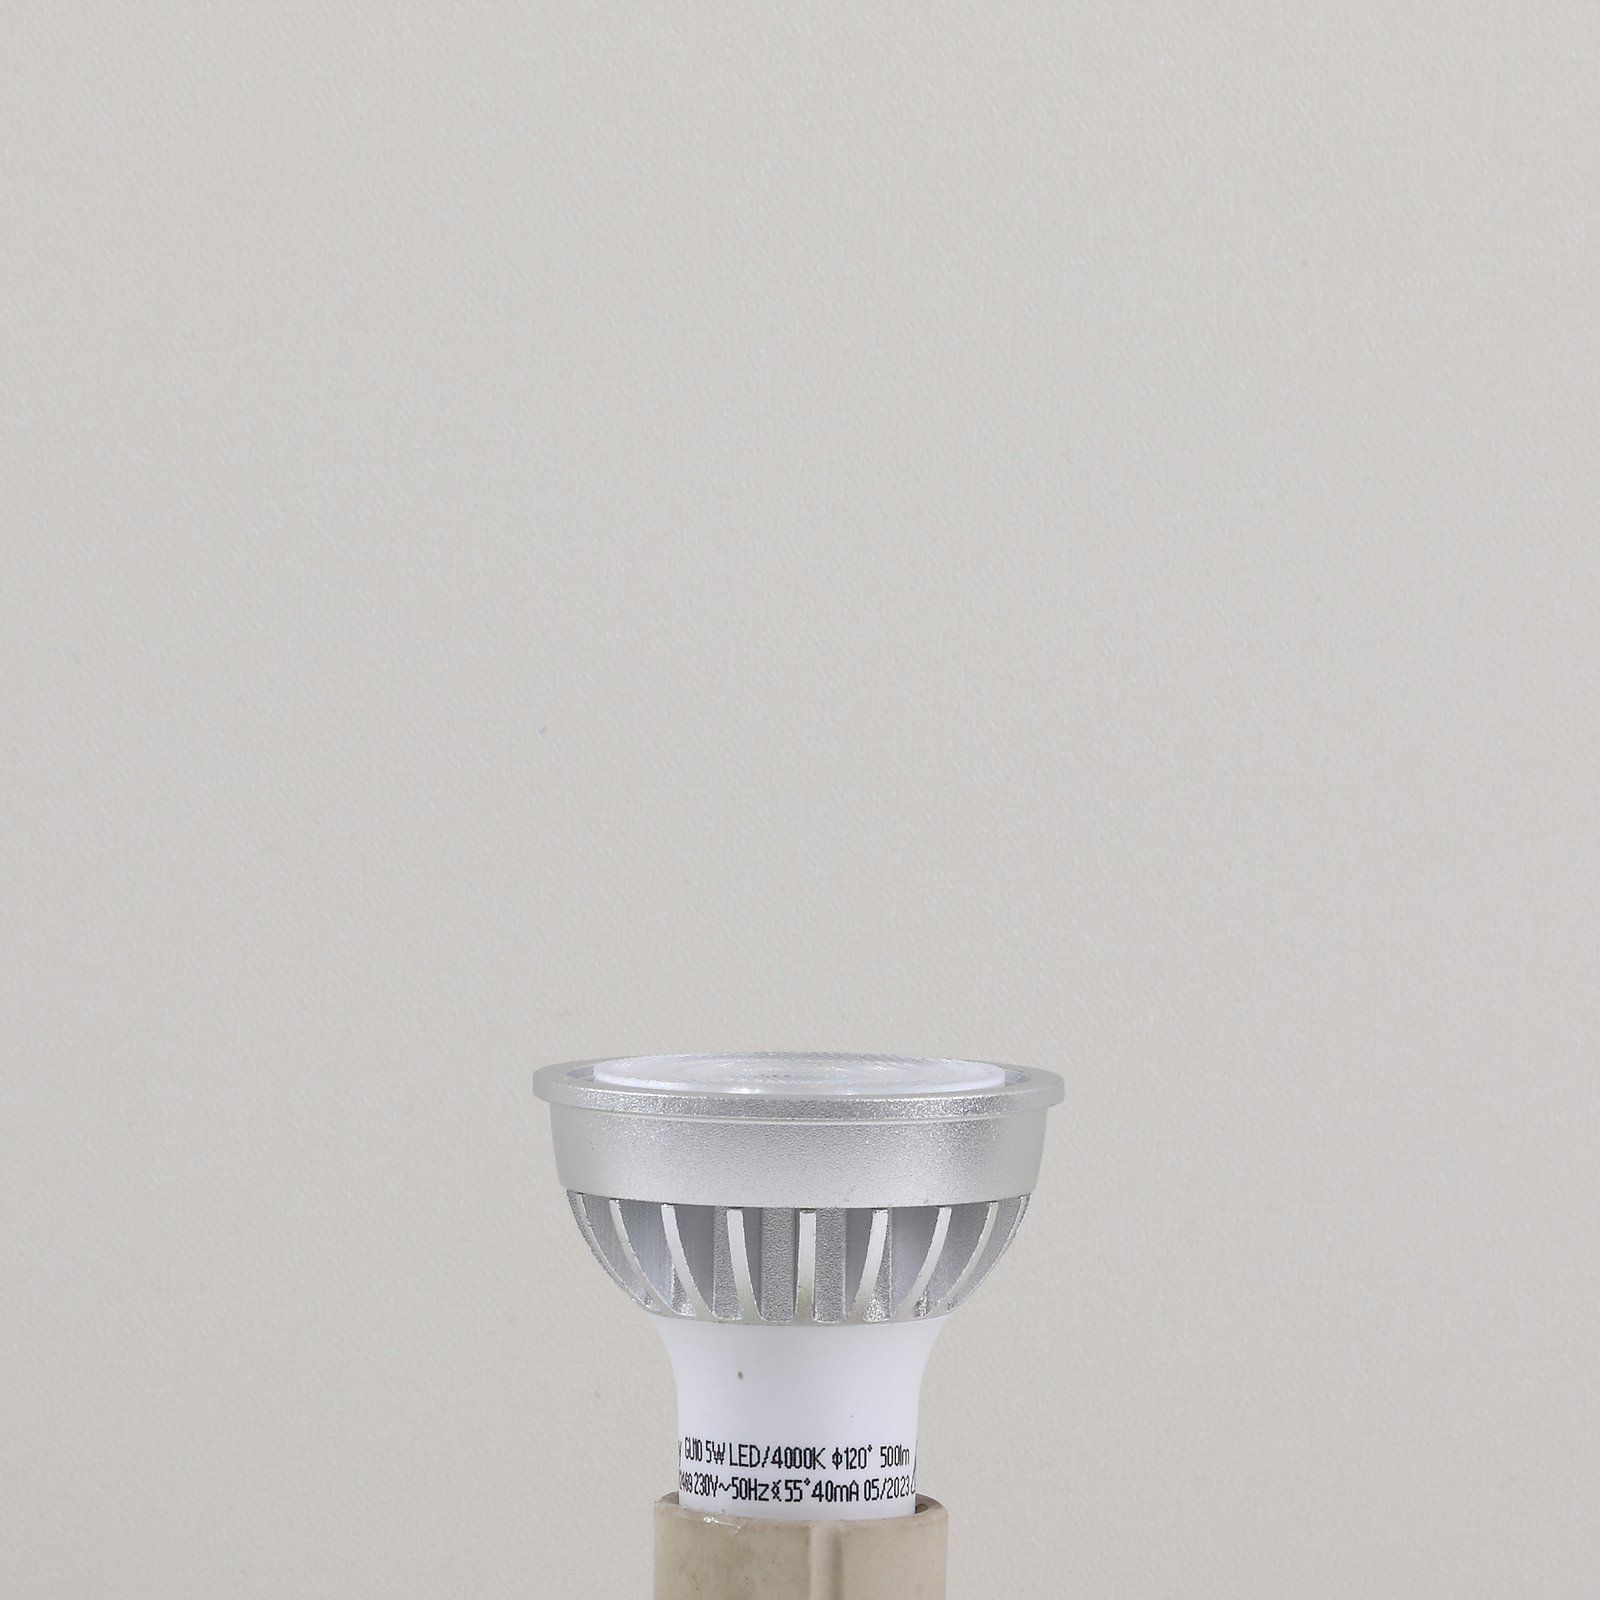 Refletor LED Lindby, GU10, 5 W, opalino, 4.000 K, 55°